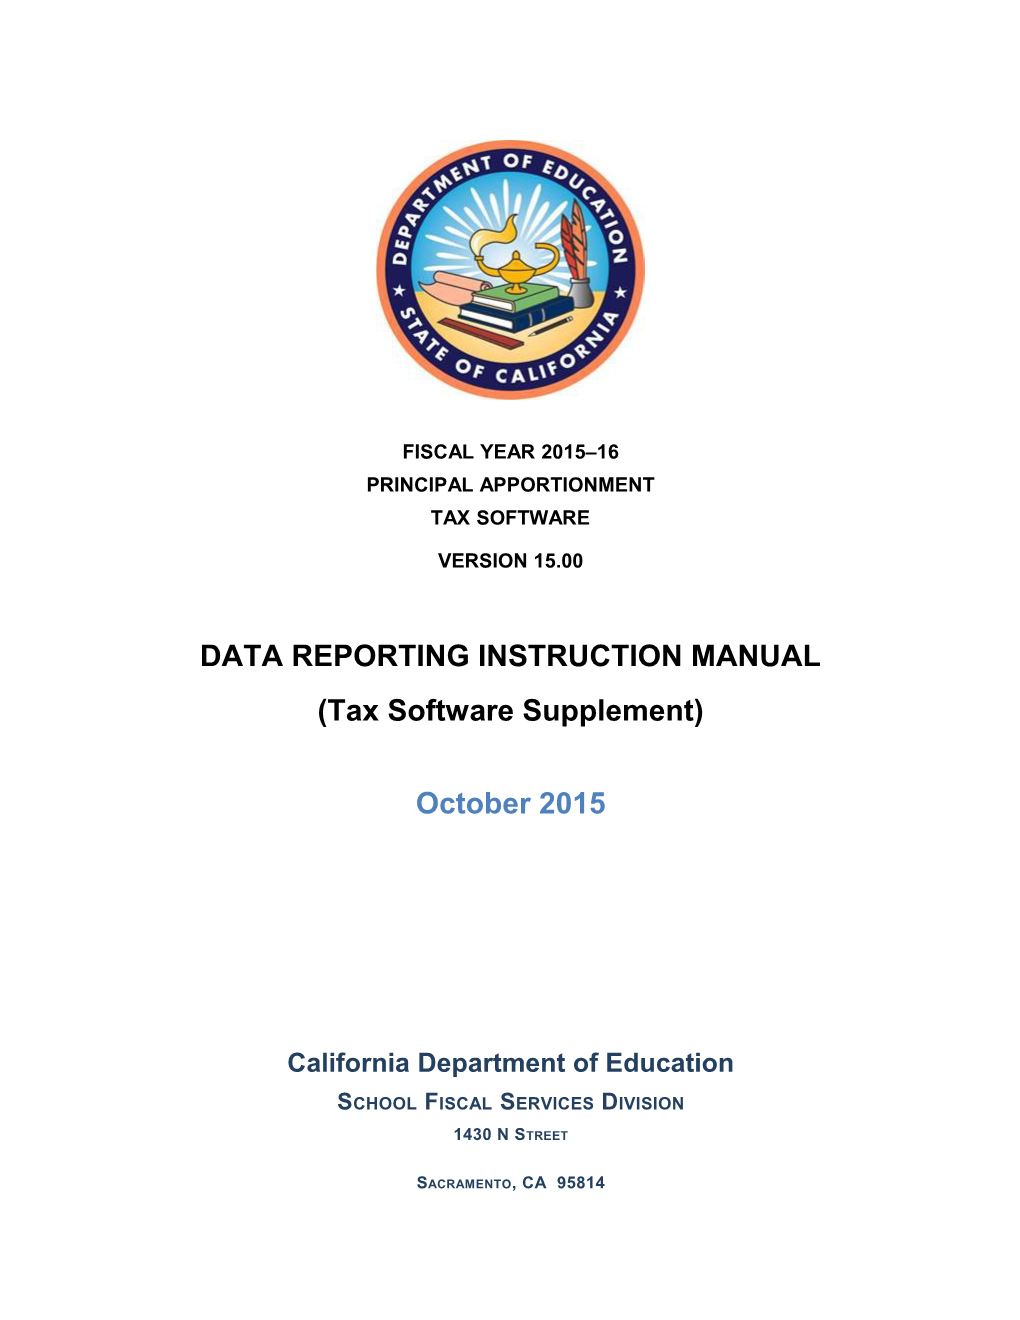 Tax Software DRIM, FY 2015-16 - Principal Apportionment (CA Dept of Education)